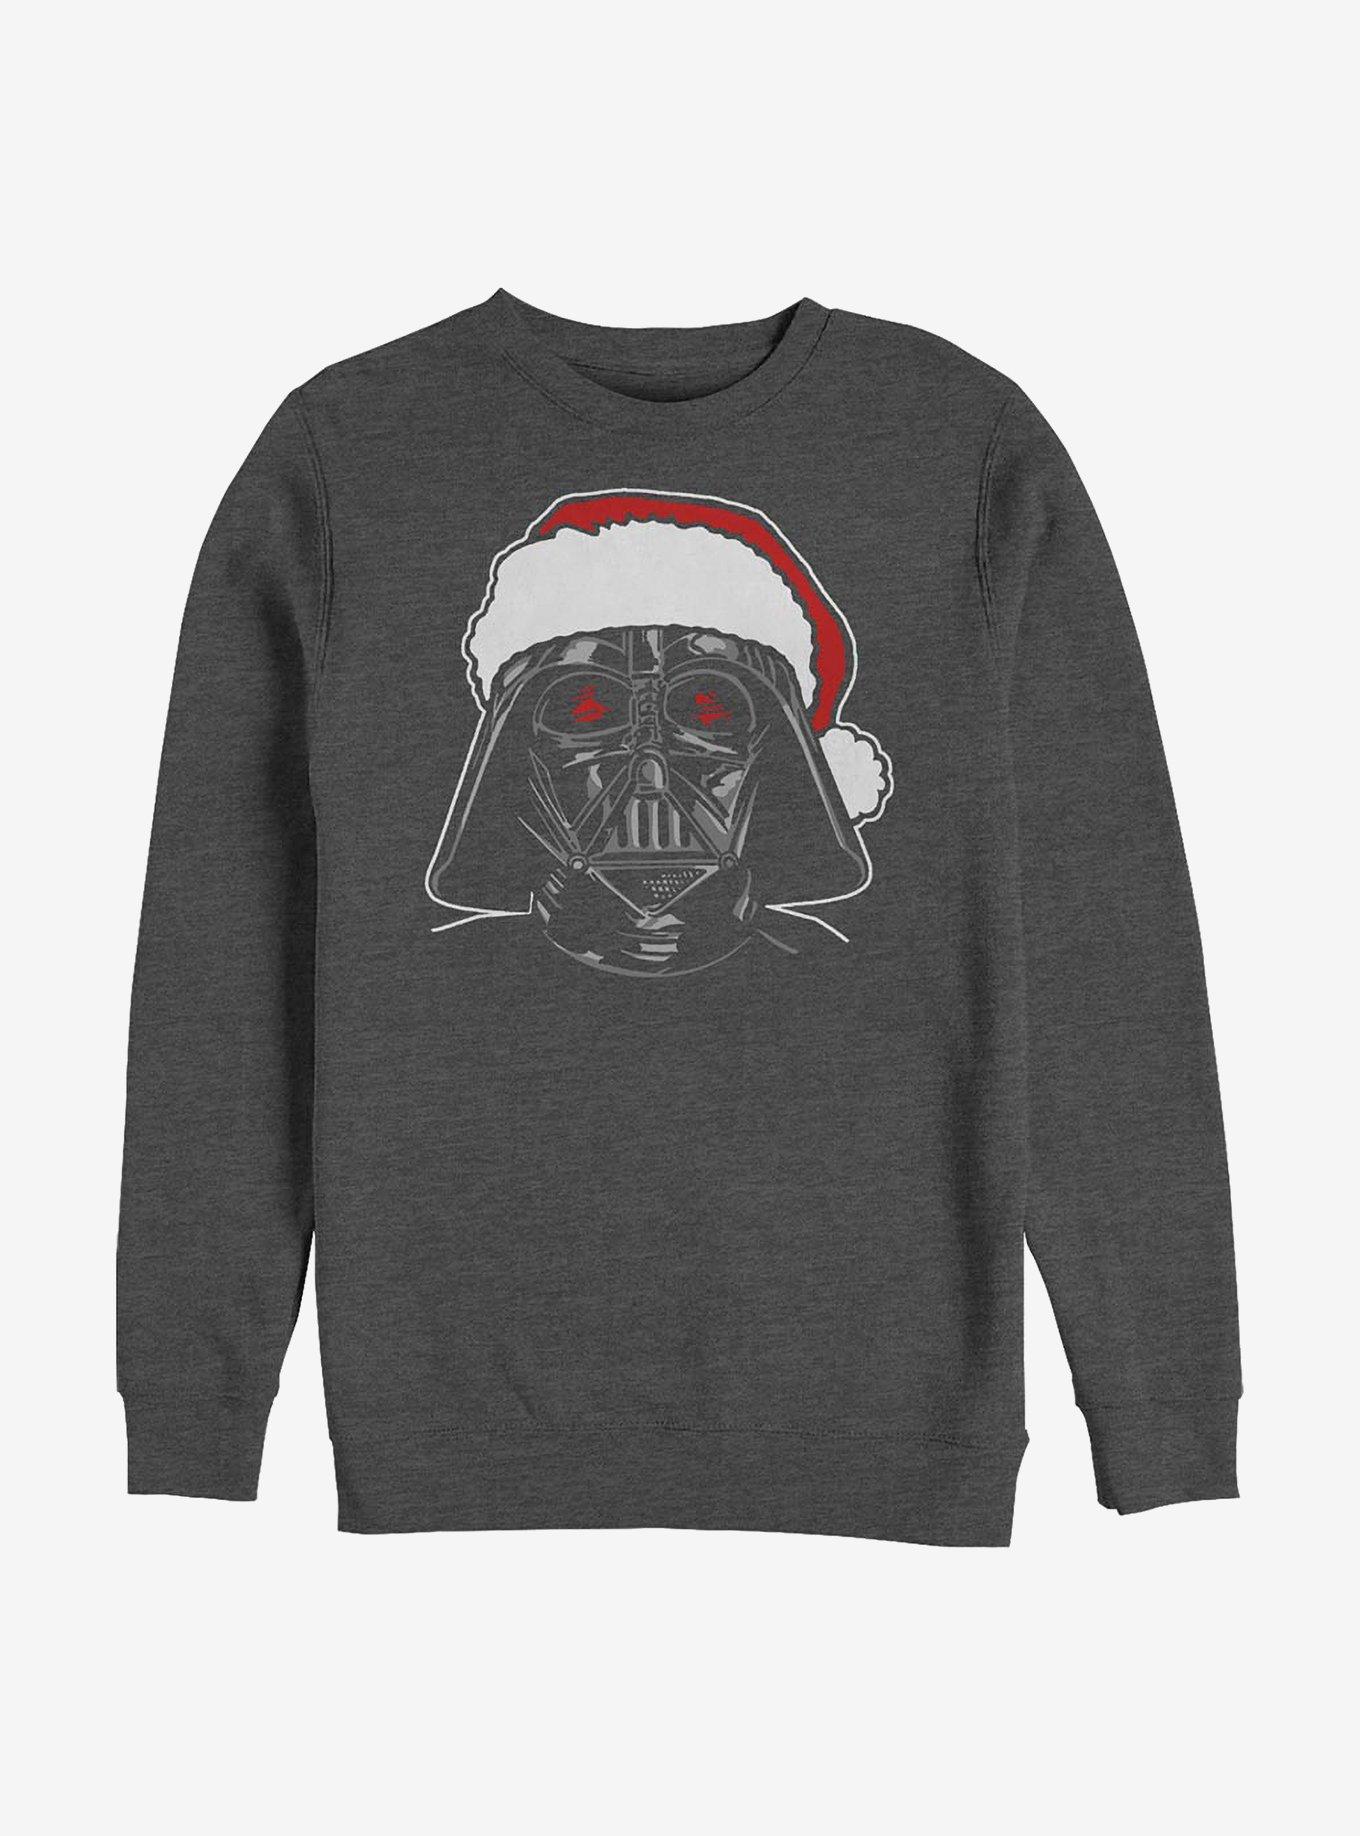 Star Wars Santa Darth Crew Sweatshirt, CHAR HTR, hi-res